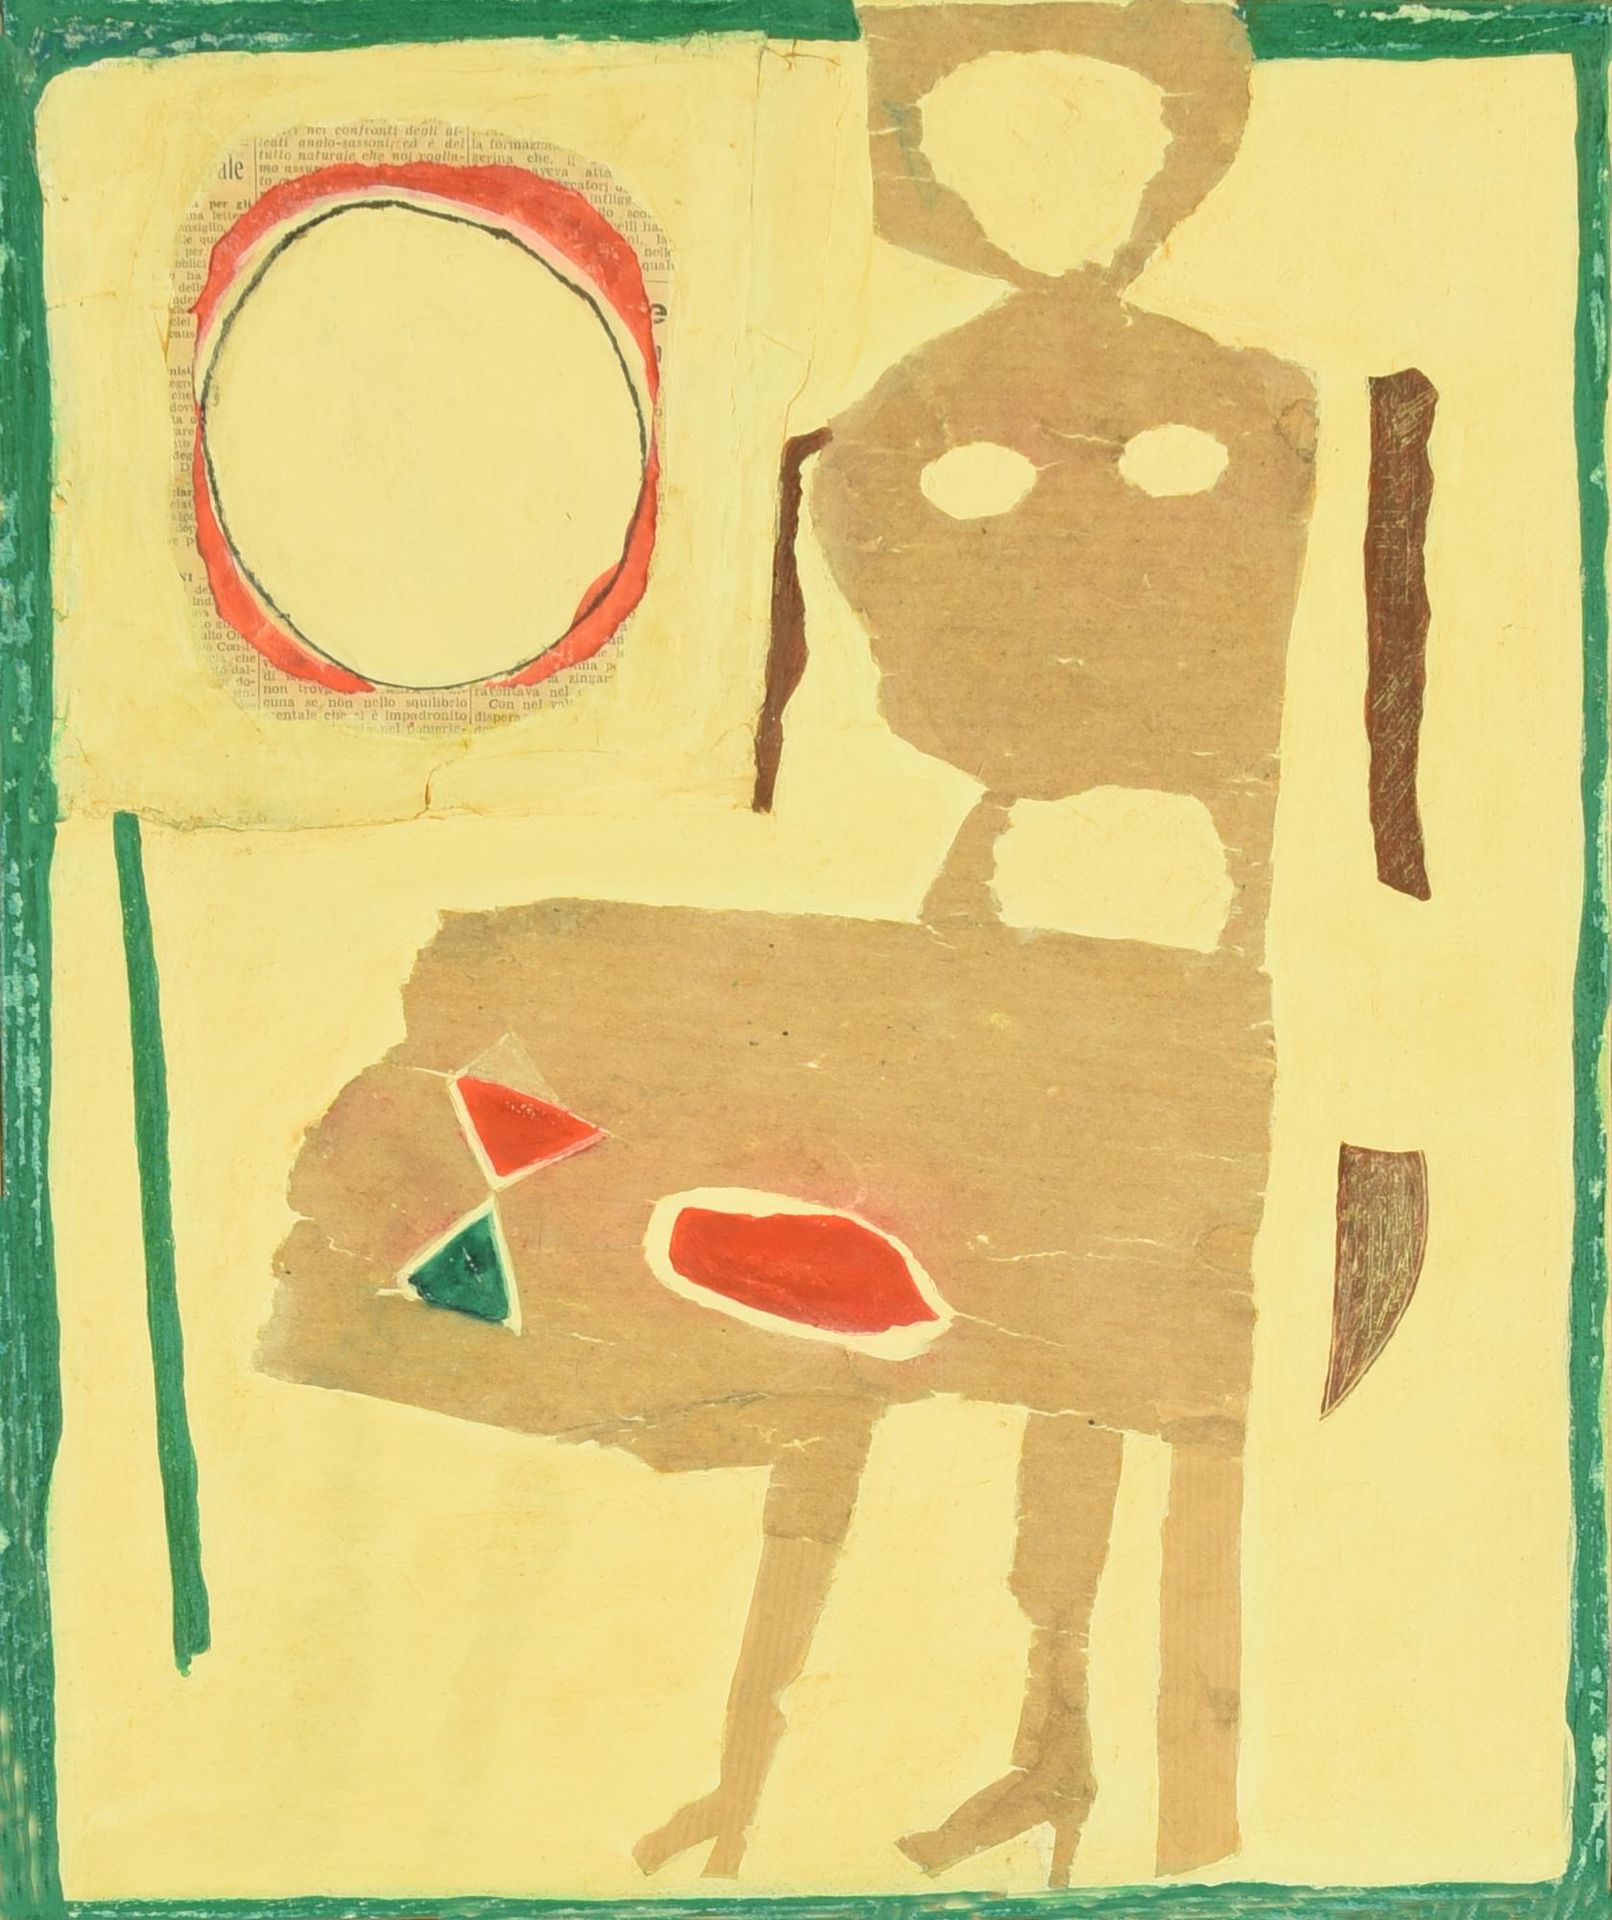 Franco Gentilini Franco Gentilini

BANCHETTO

纸上钢笔画和拼贴画，贴在画布上，45x31厘米



于1965年执&hellip;